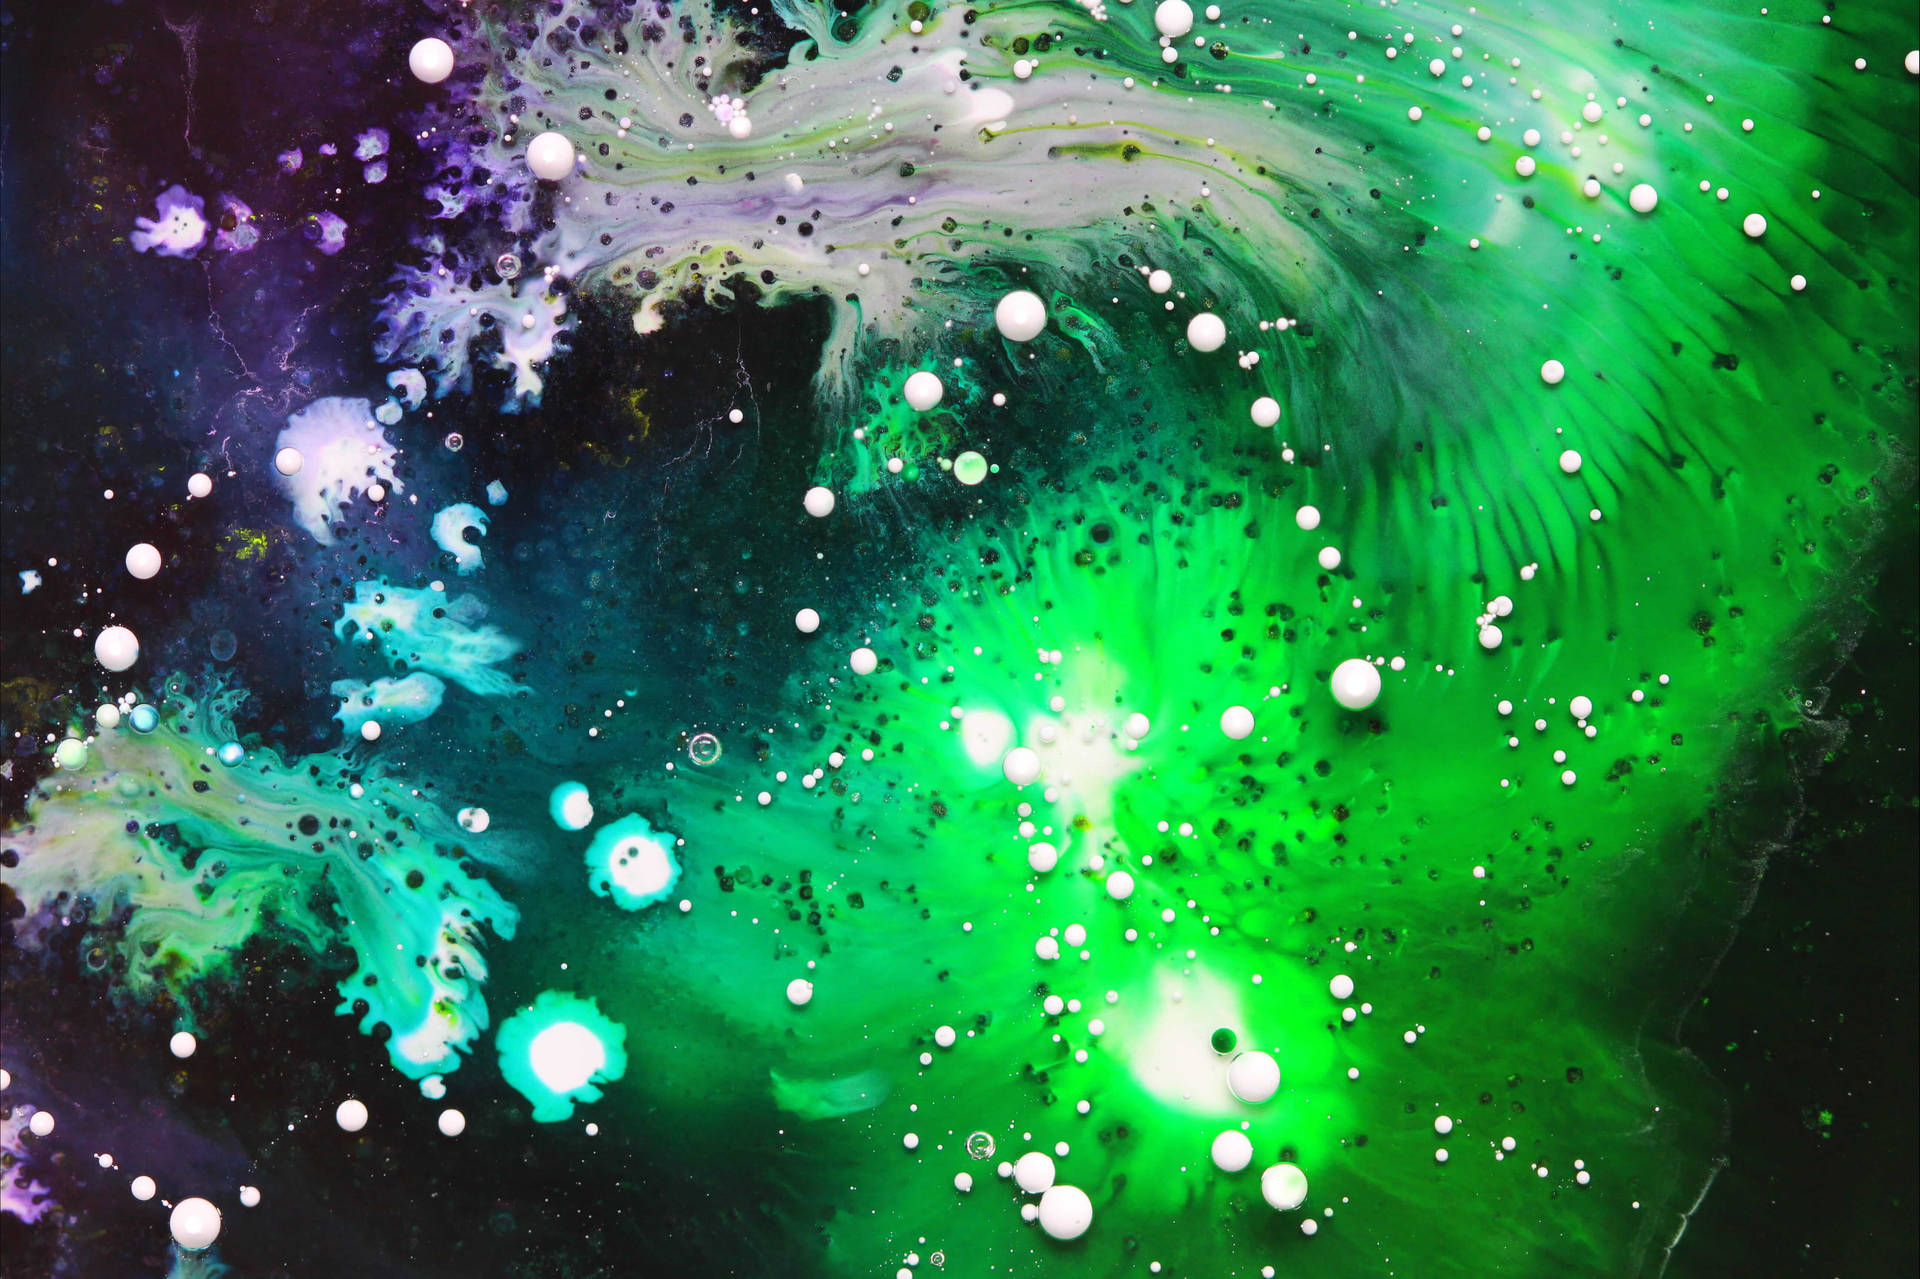 Neon Green Paint Splashes Background